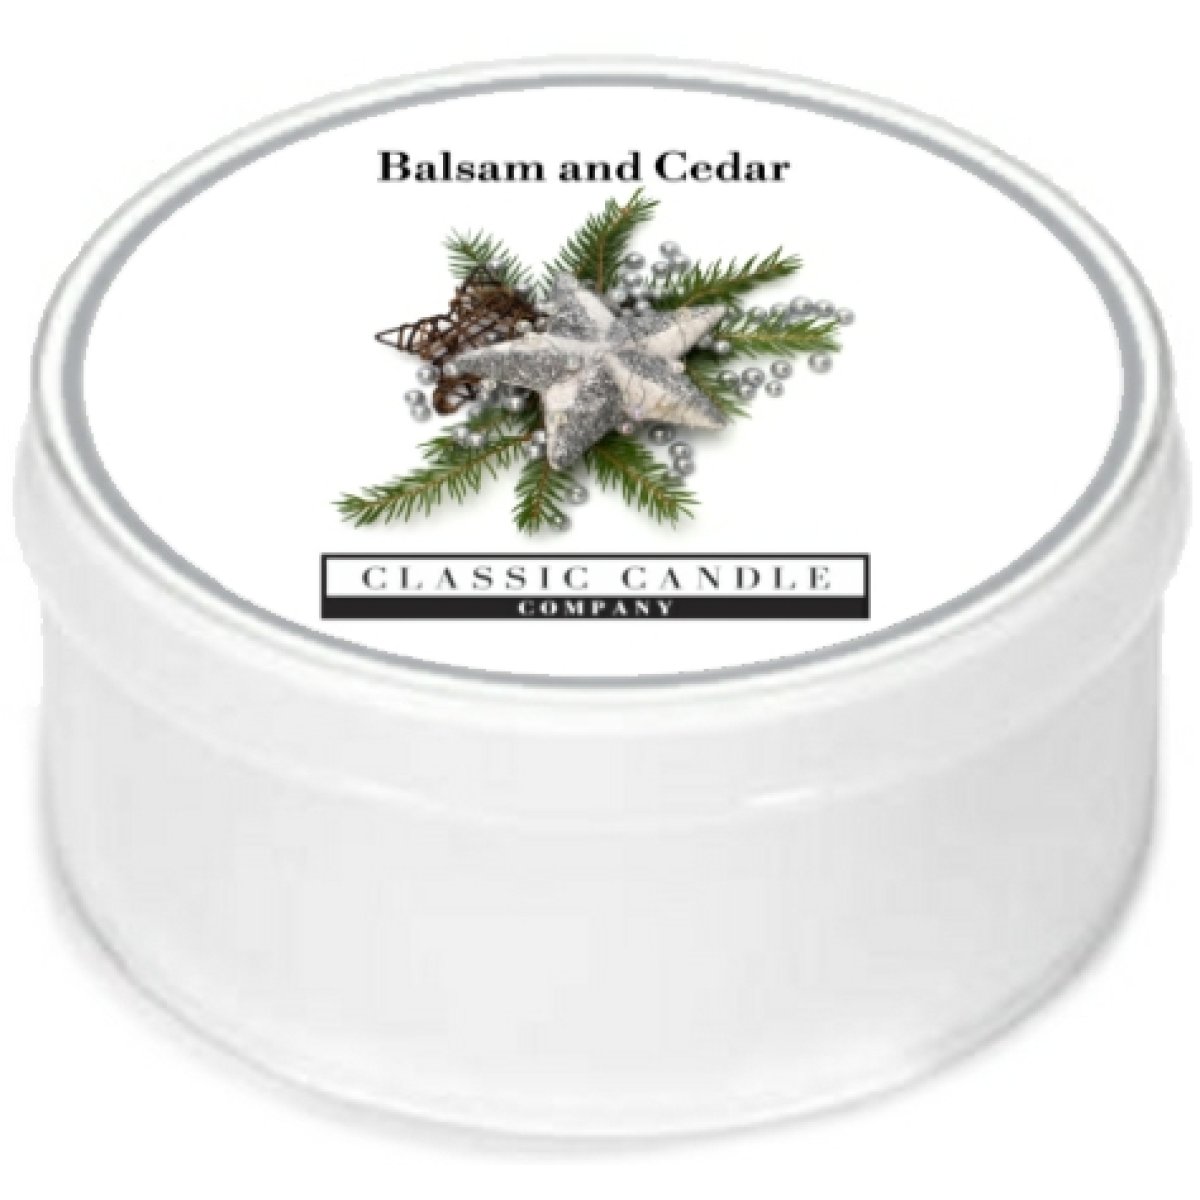 Balsam and Cedar Minilight